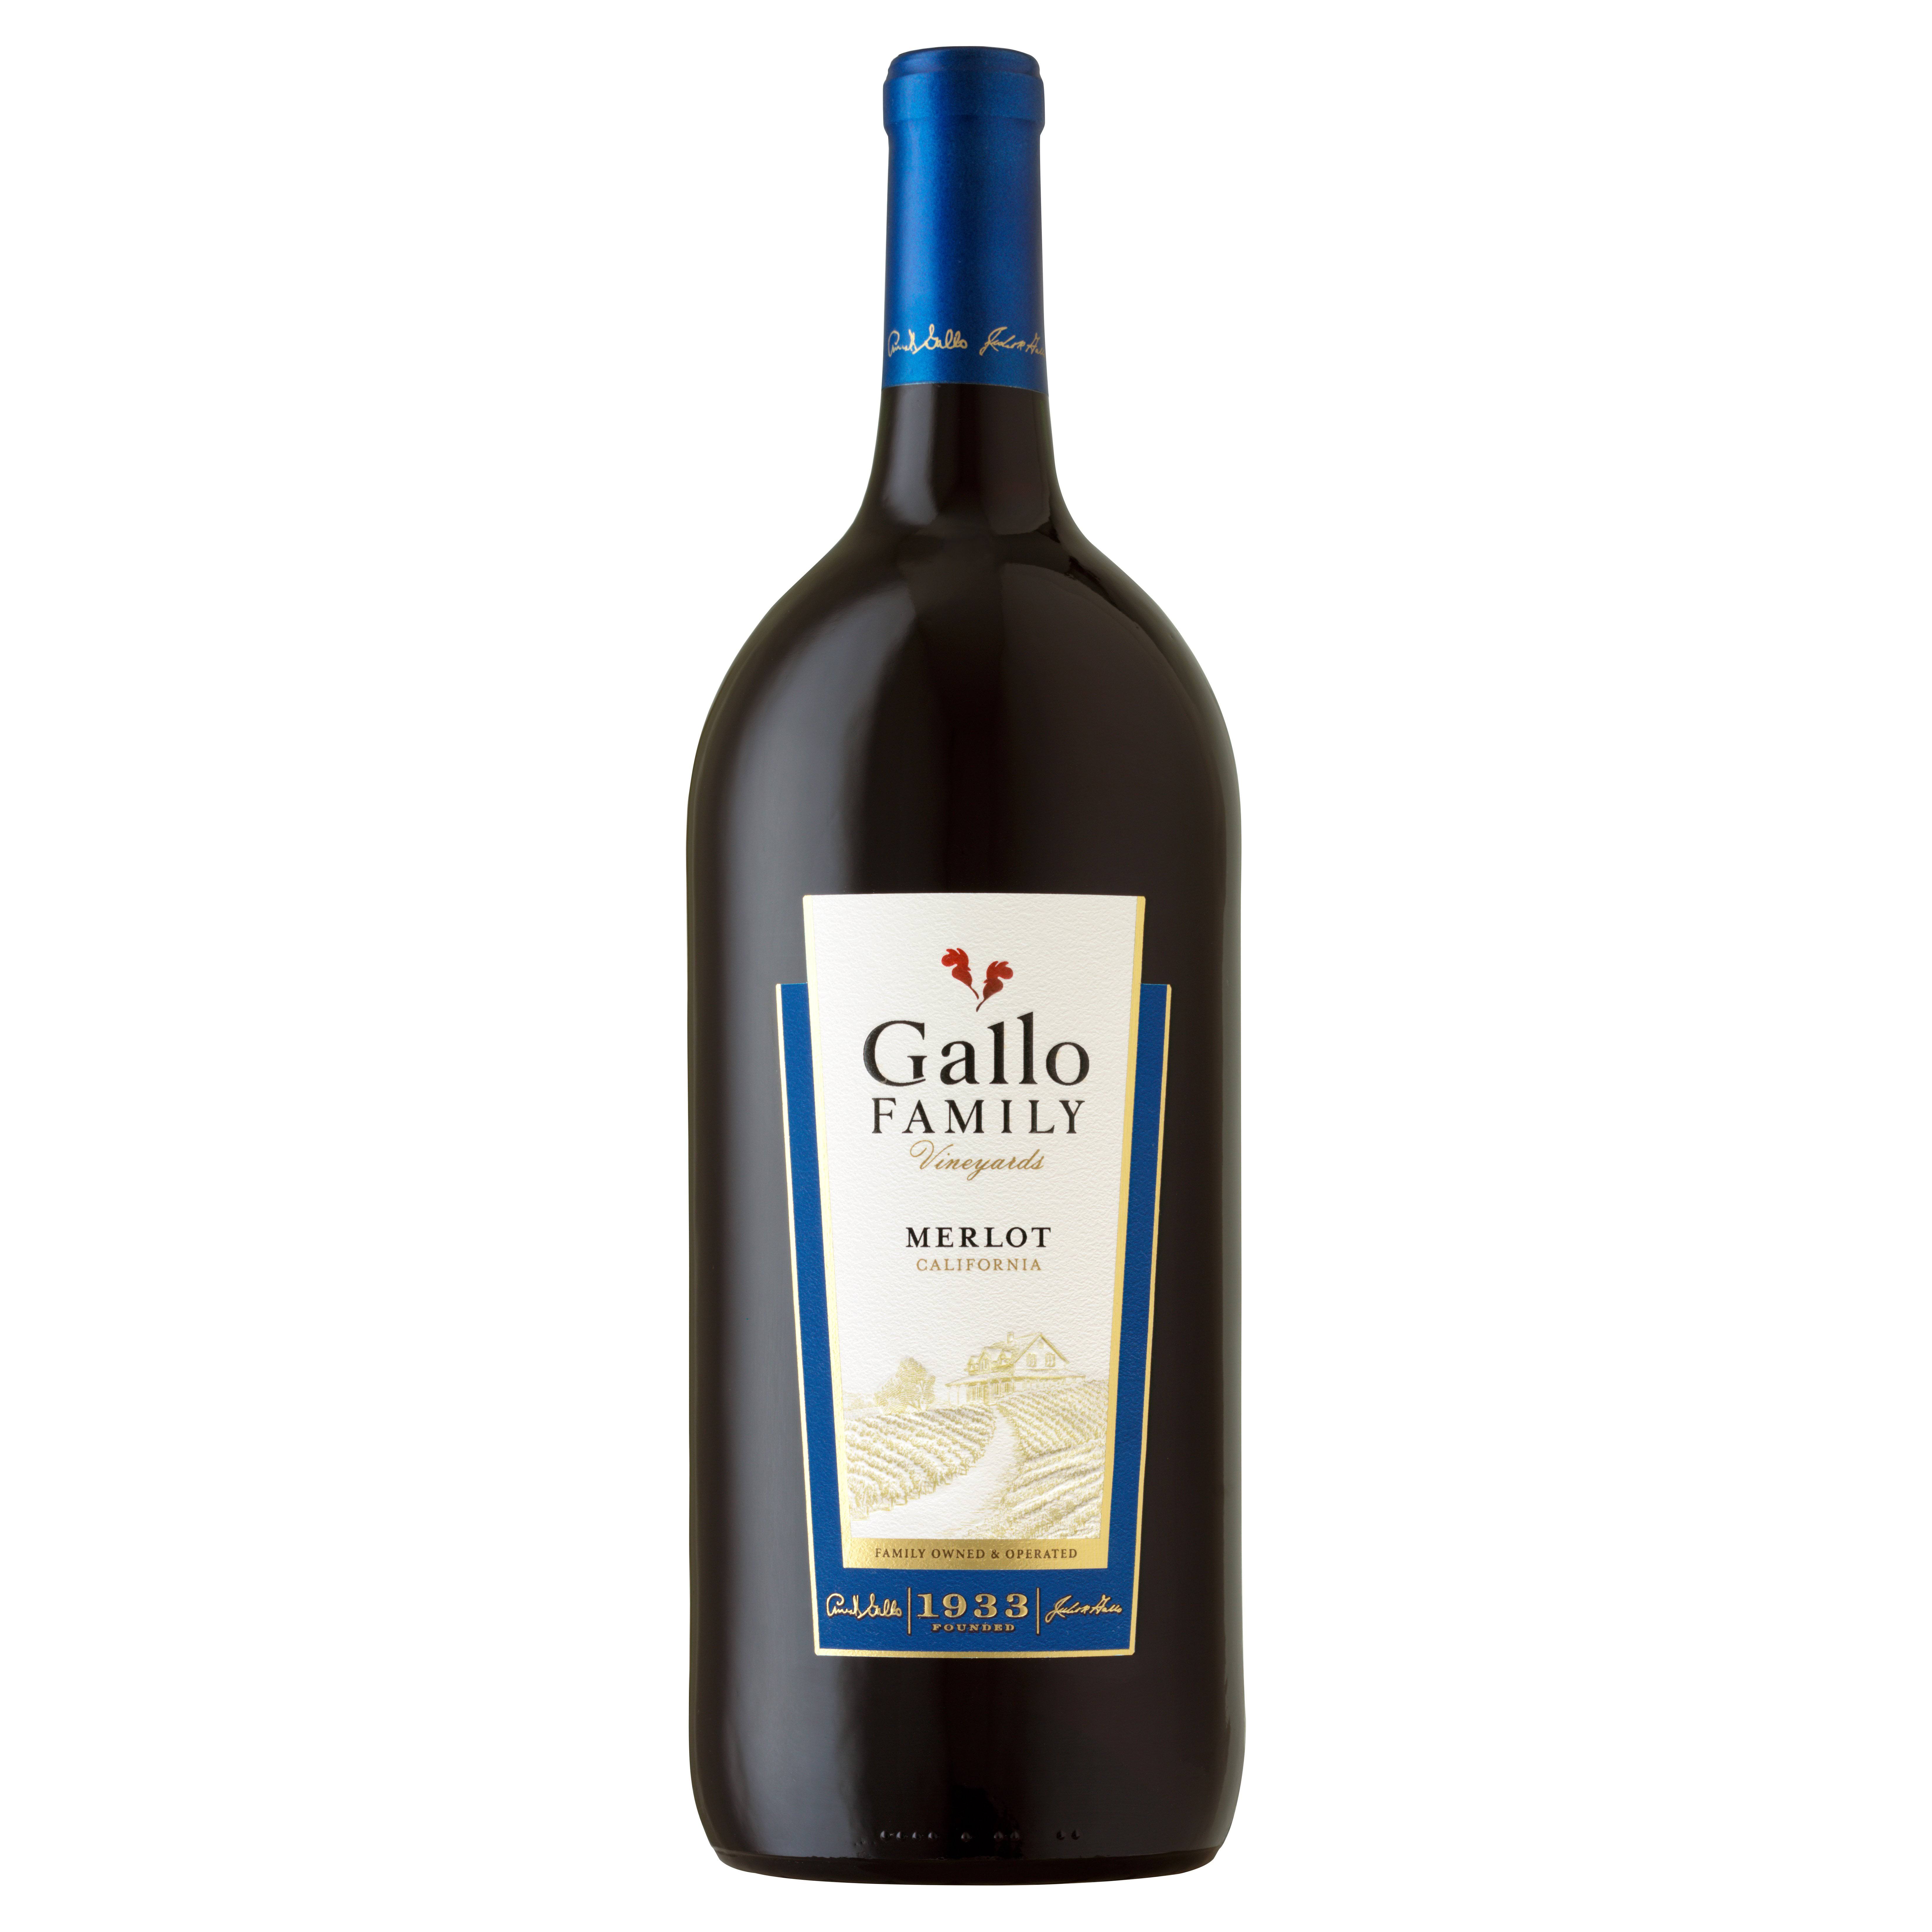 Gallo Family Vineyards Ernest & Julio Gallo Merlot - California